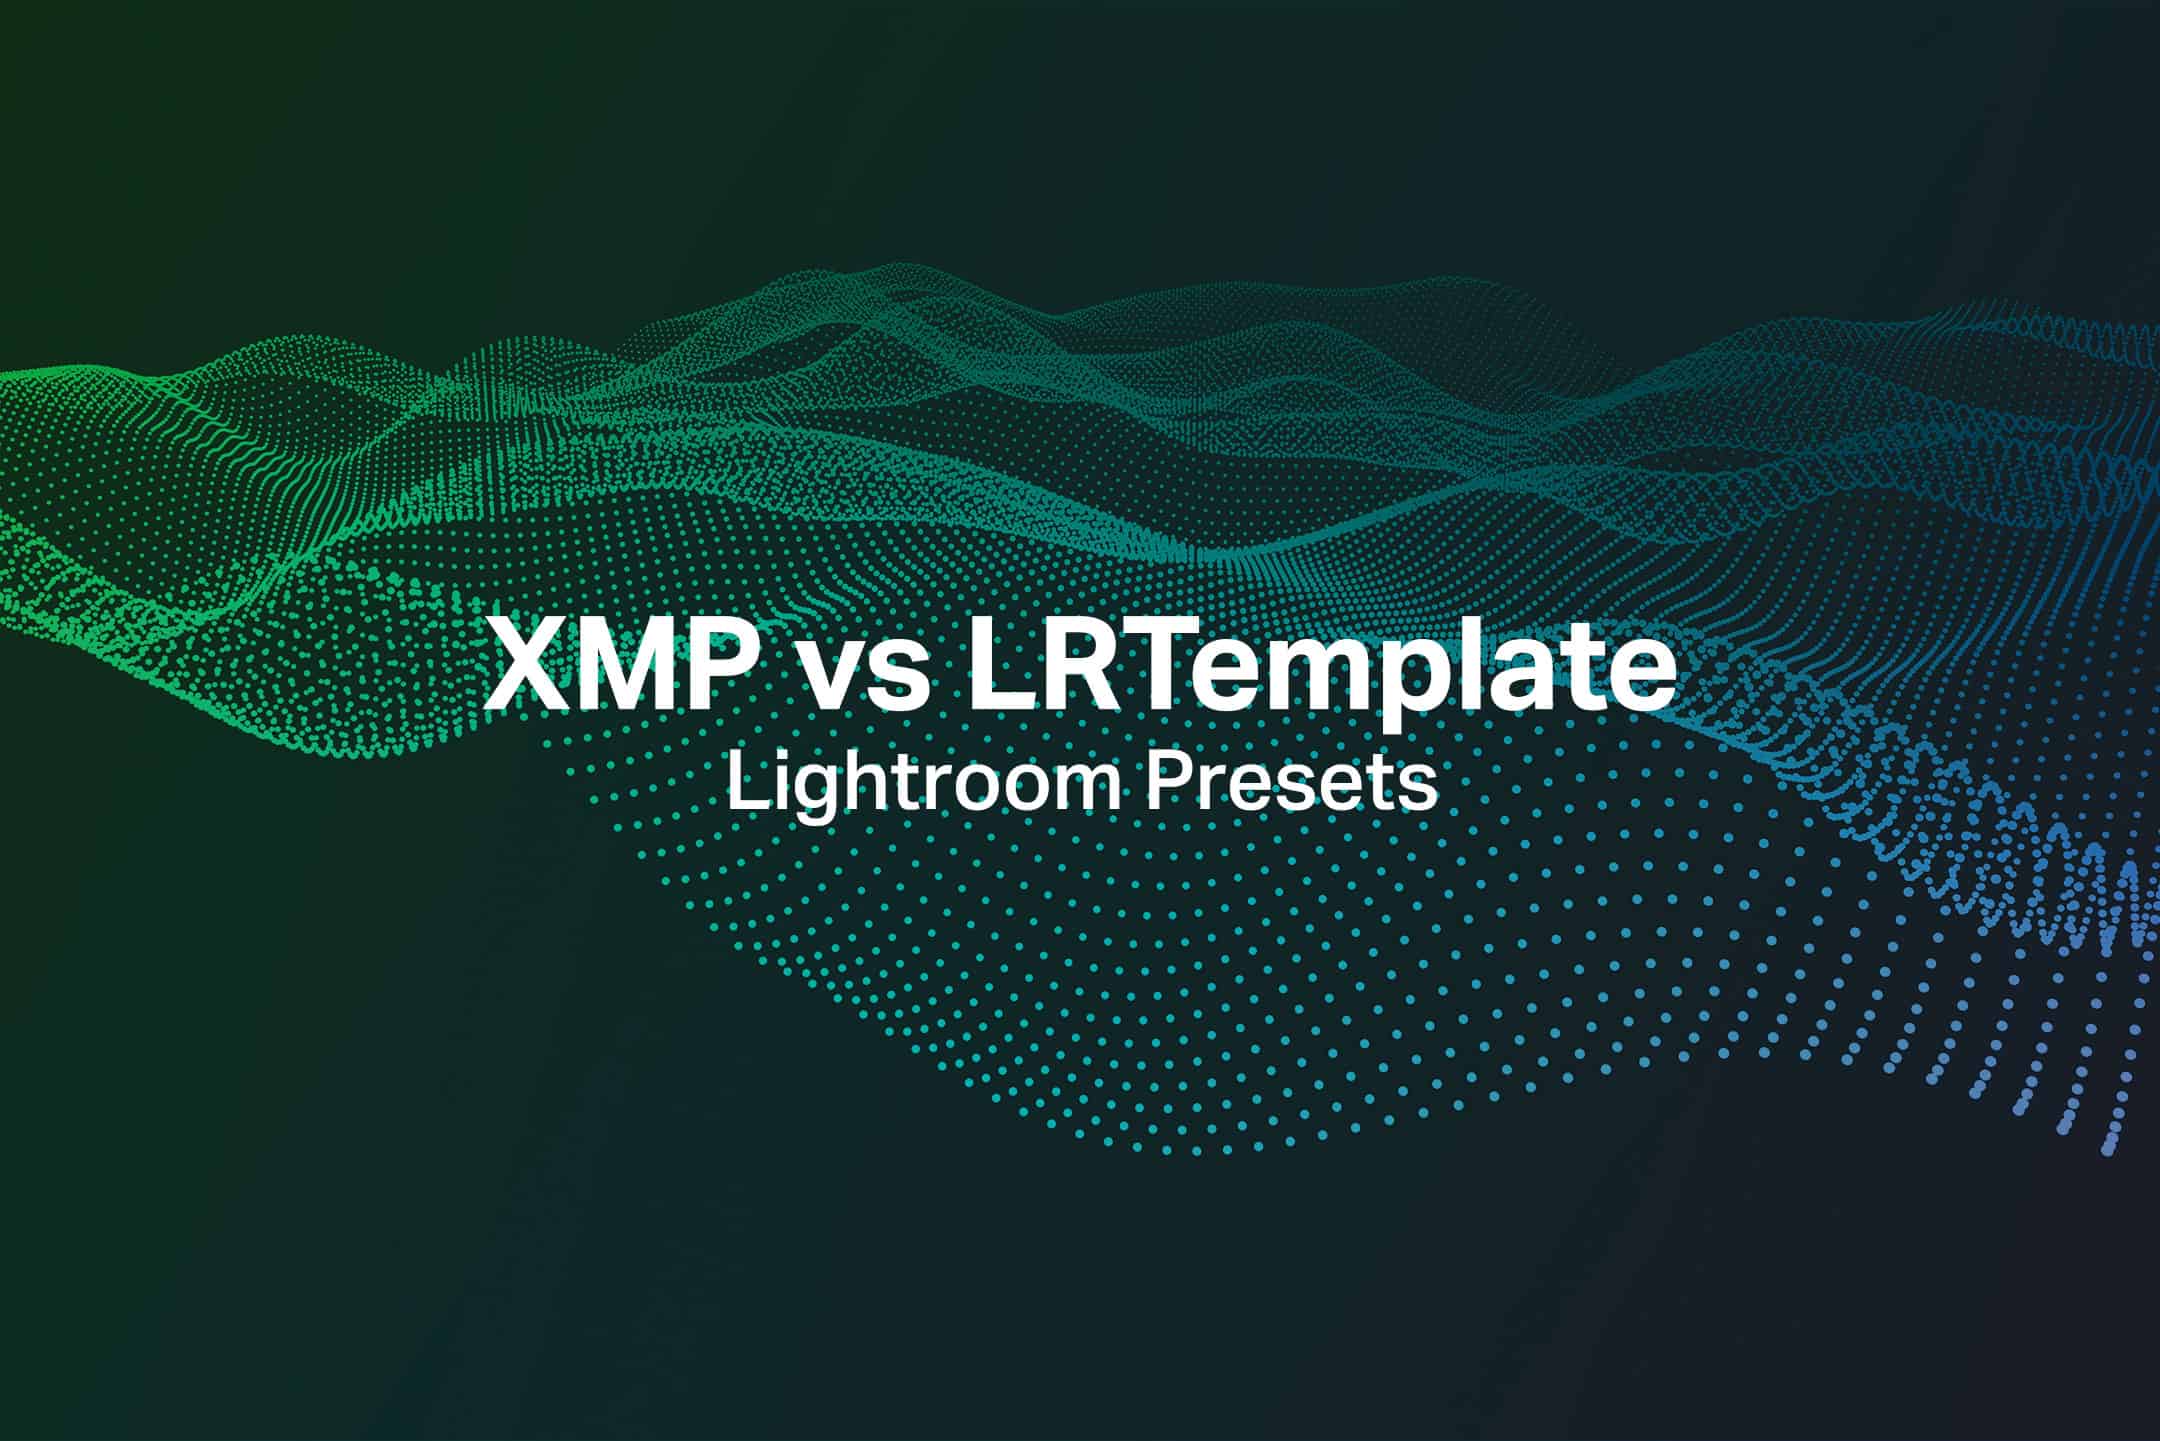 New vs Old: XMP vs LRTemplate Lightroom Presets